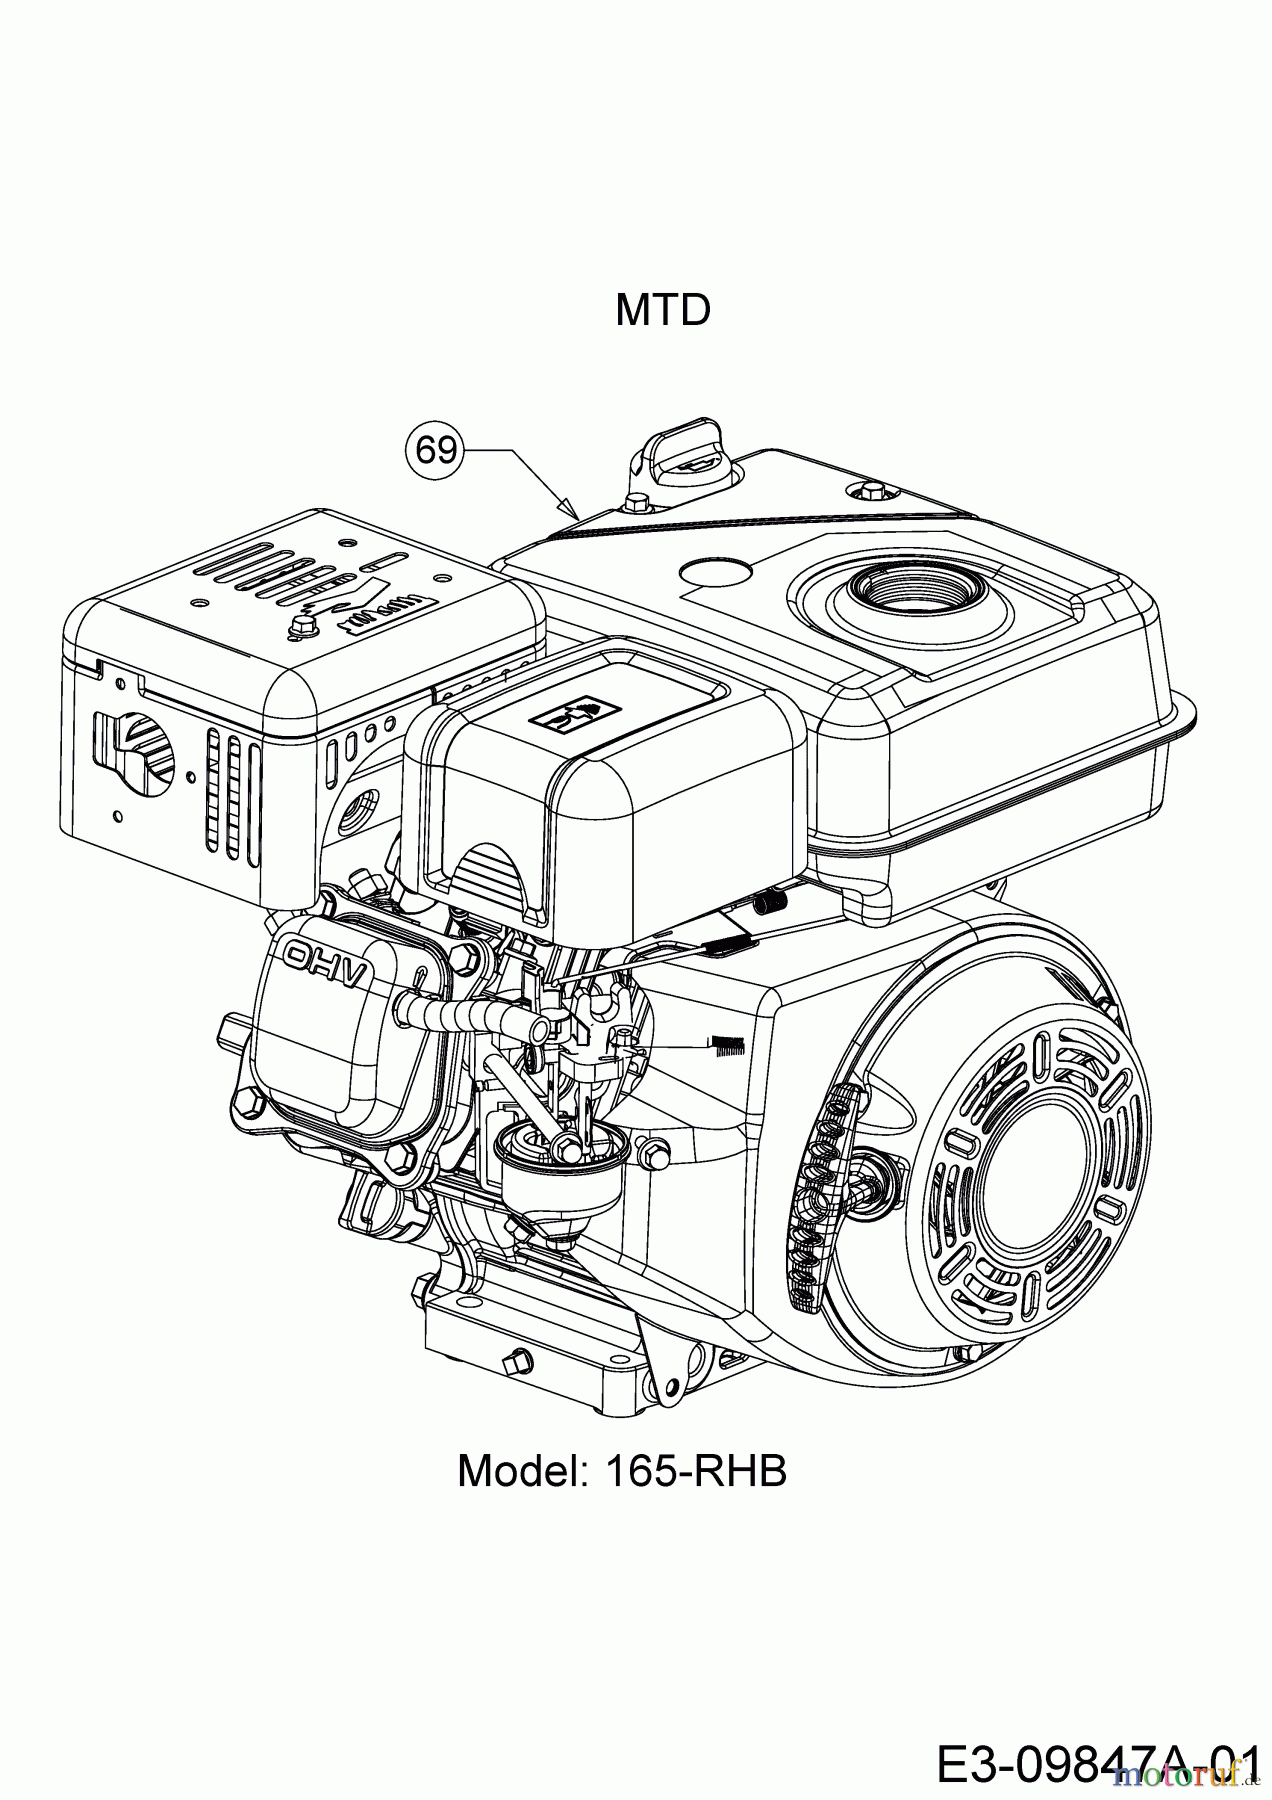  MTD Tillers T/380 M 21D-38MT678 (2020) Engine MTD